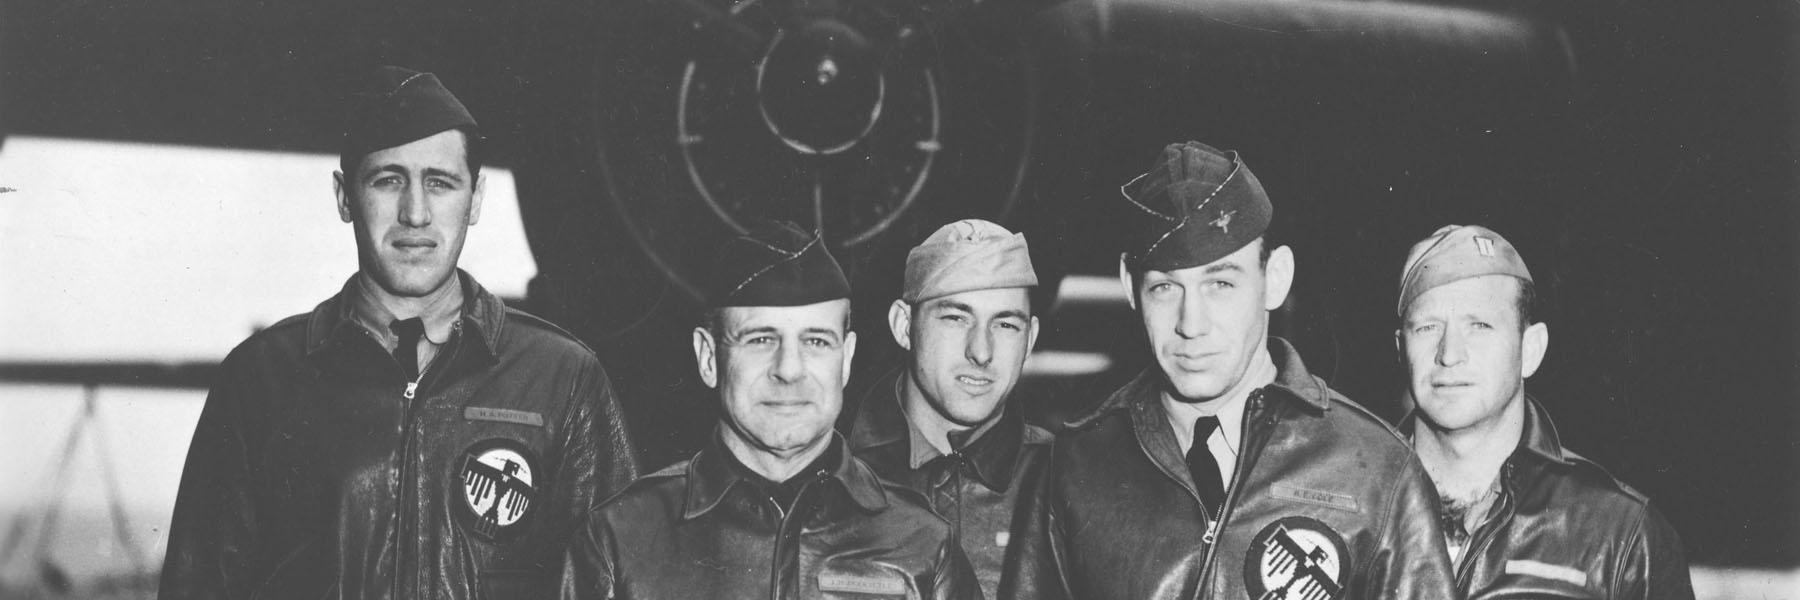 Doolittle Raiders posing with bomber